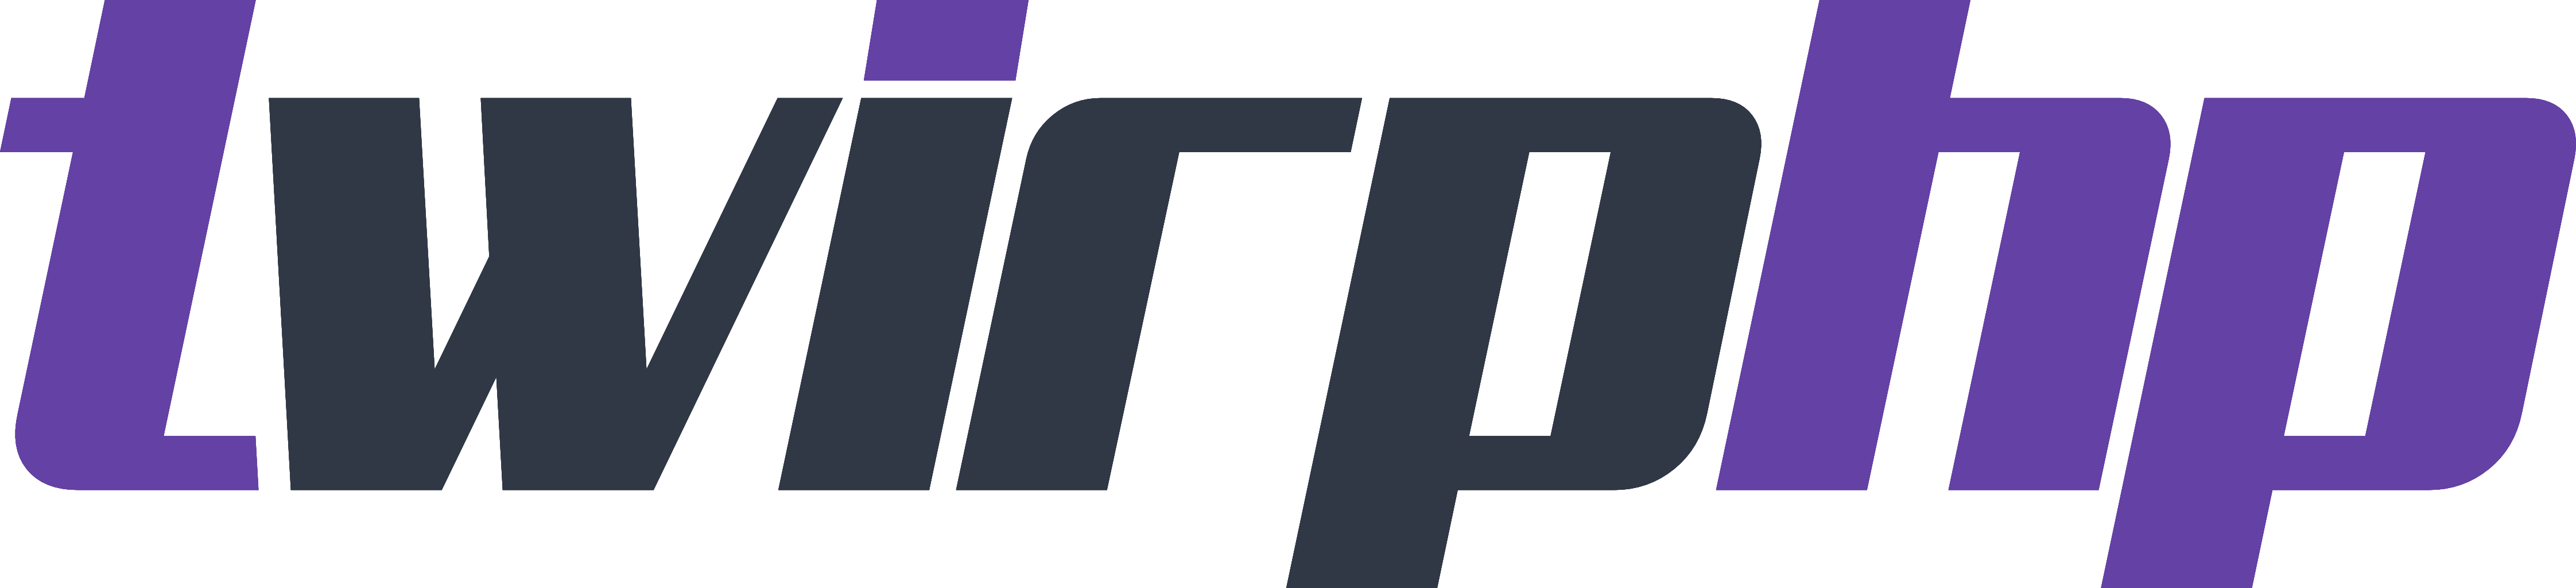 TwirPHP logo